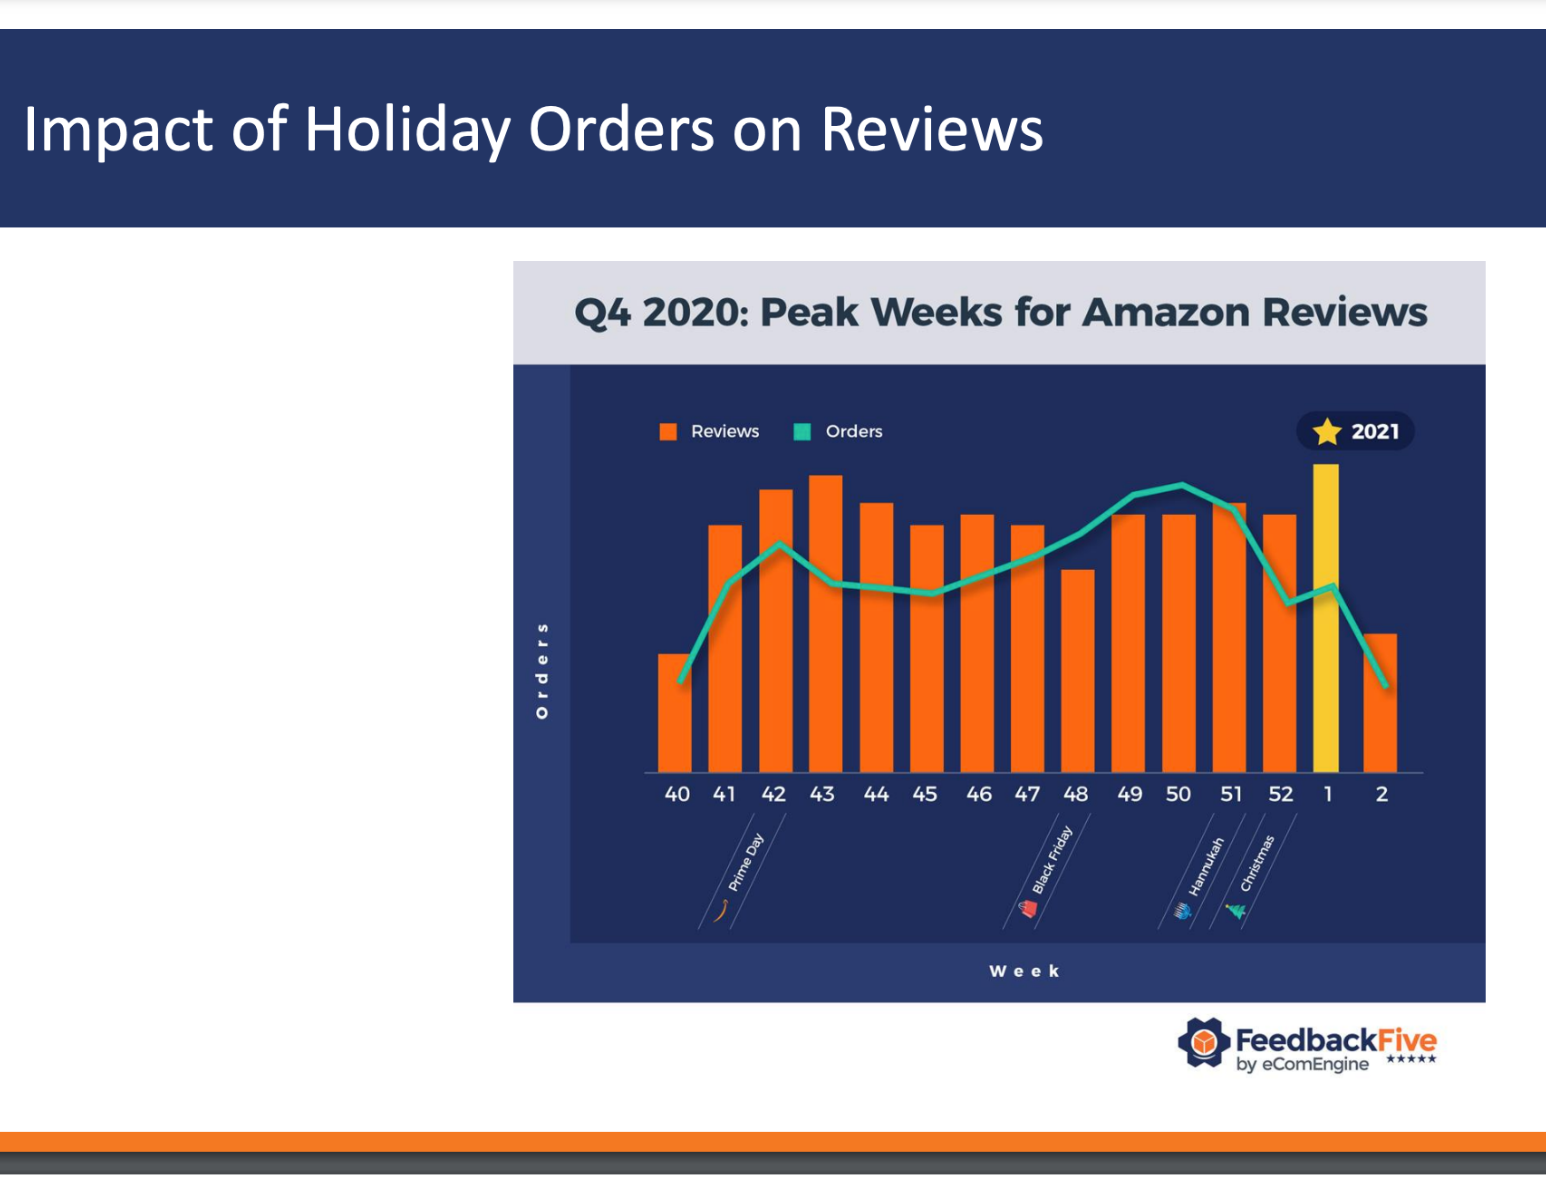 Amazon Holiday Reviews